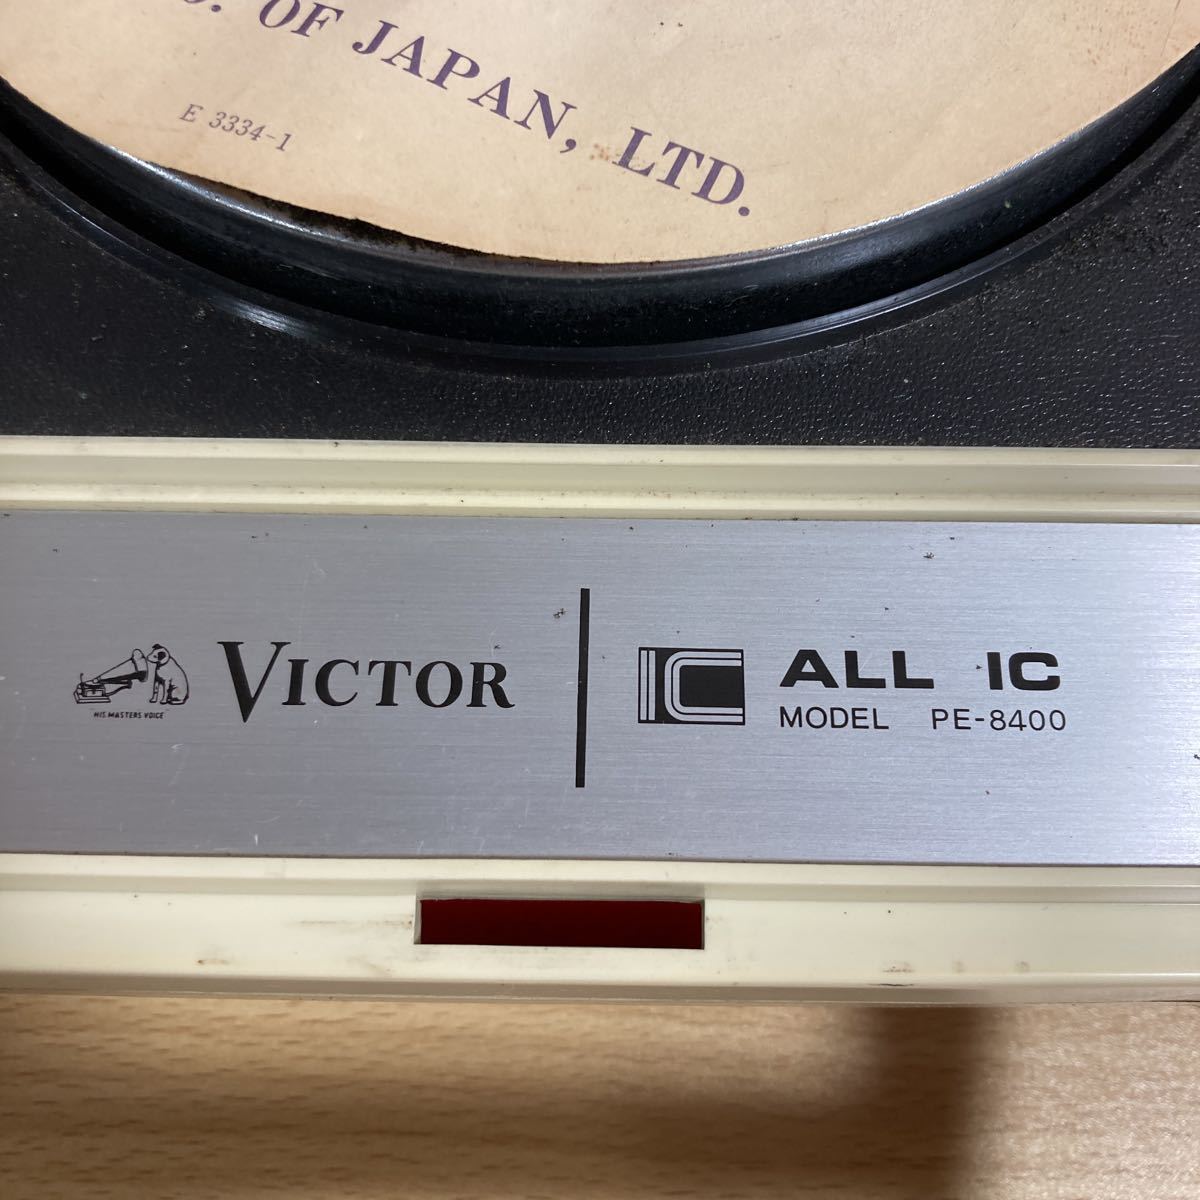 Victor ビクター ALL 1C MODEL PE-8400 ポータブルステレオ レコードプレーヤー ターンテーブル オーディオ機器 音響機器 6 ア 1373_画像6